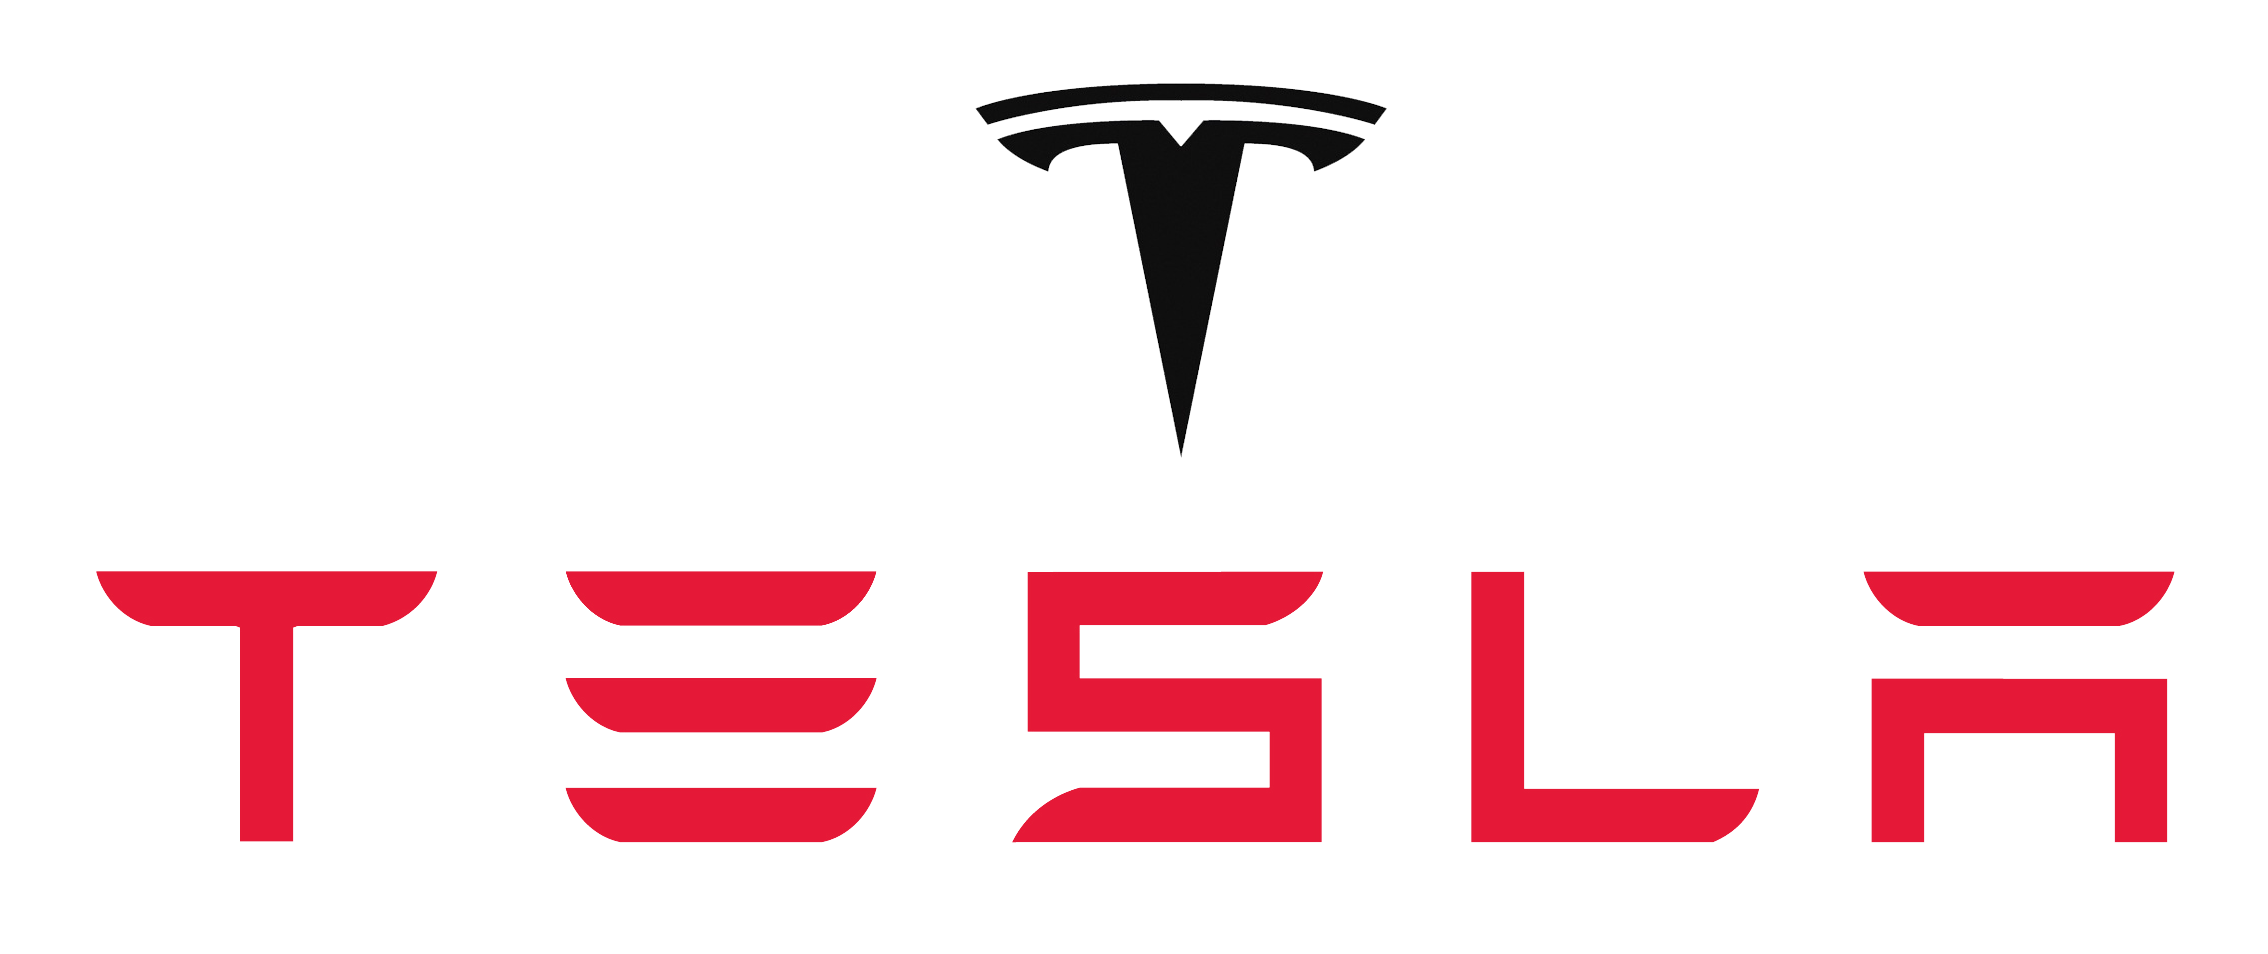 Tesla-Motors-symbol